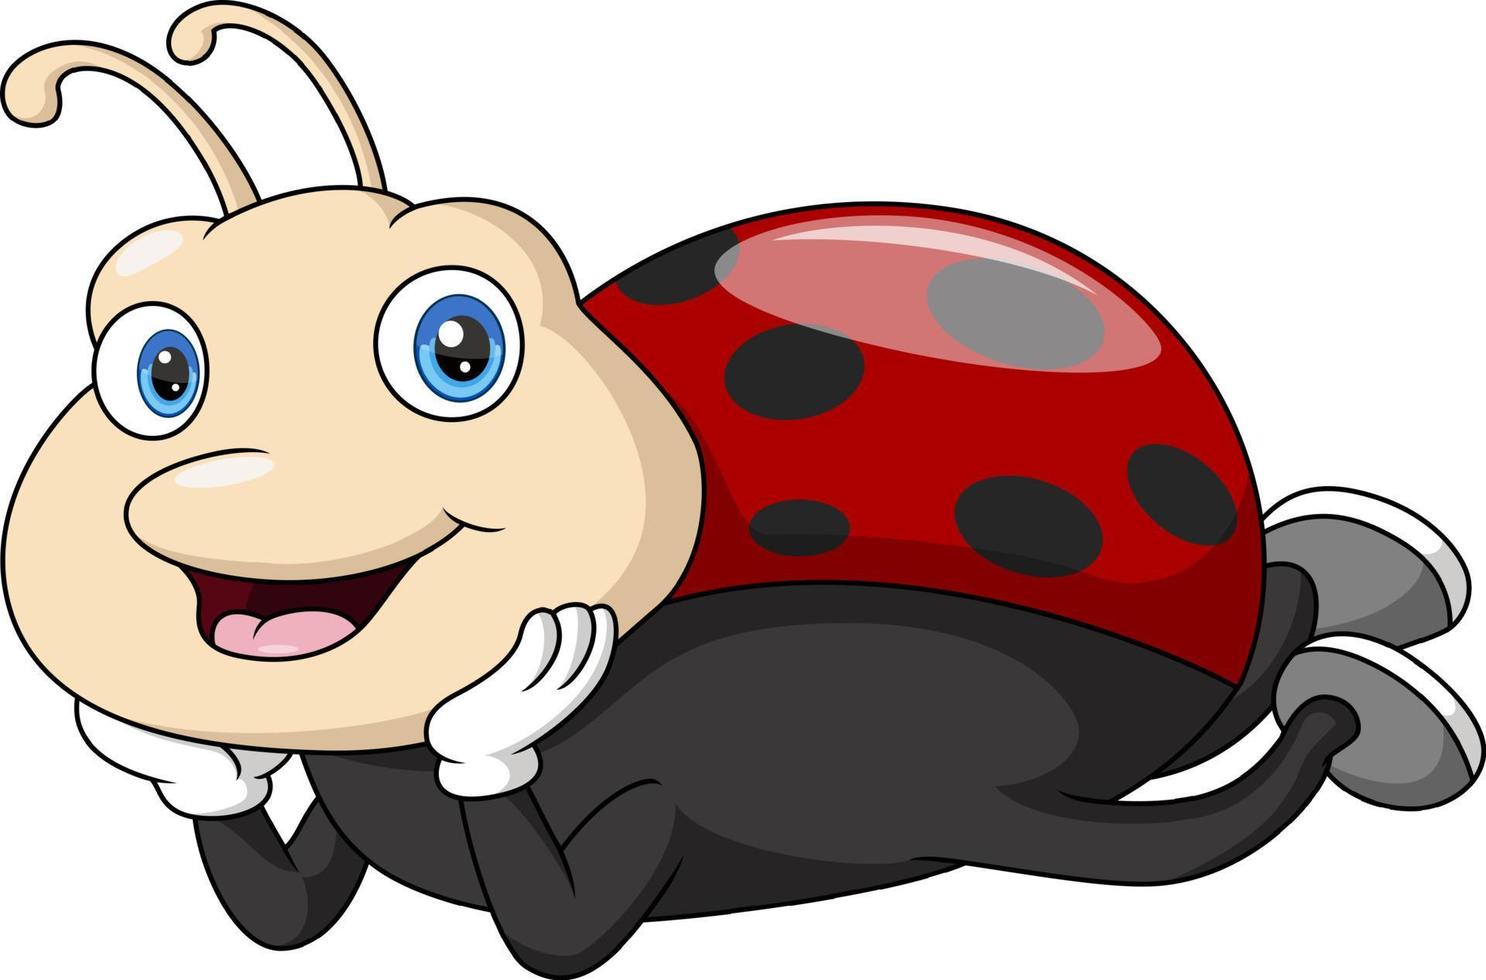 Cute ladybug cartoon on white background vector